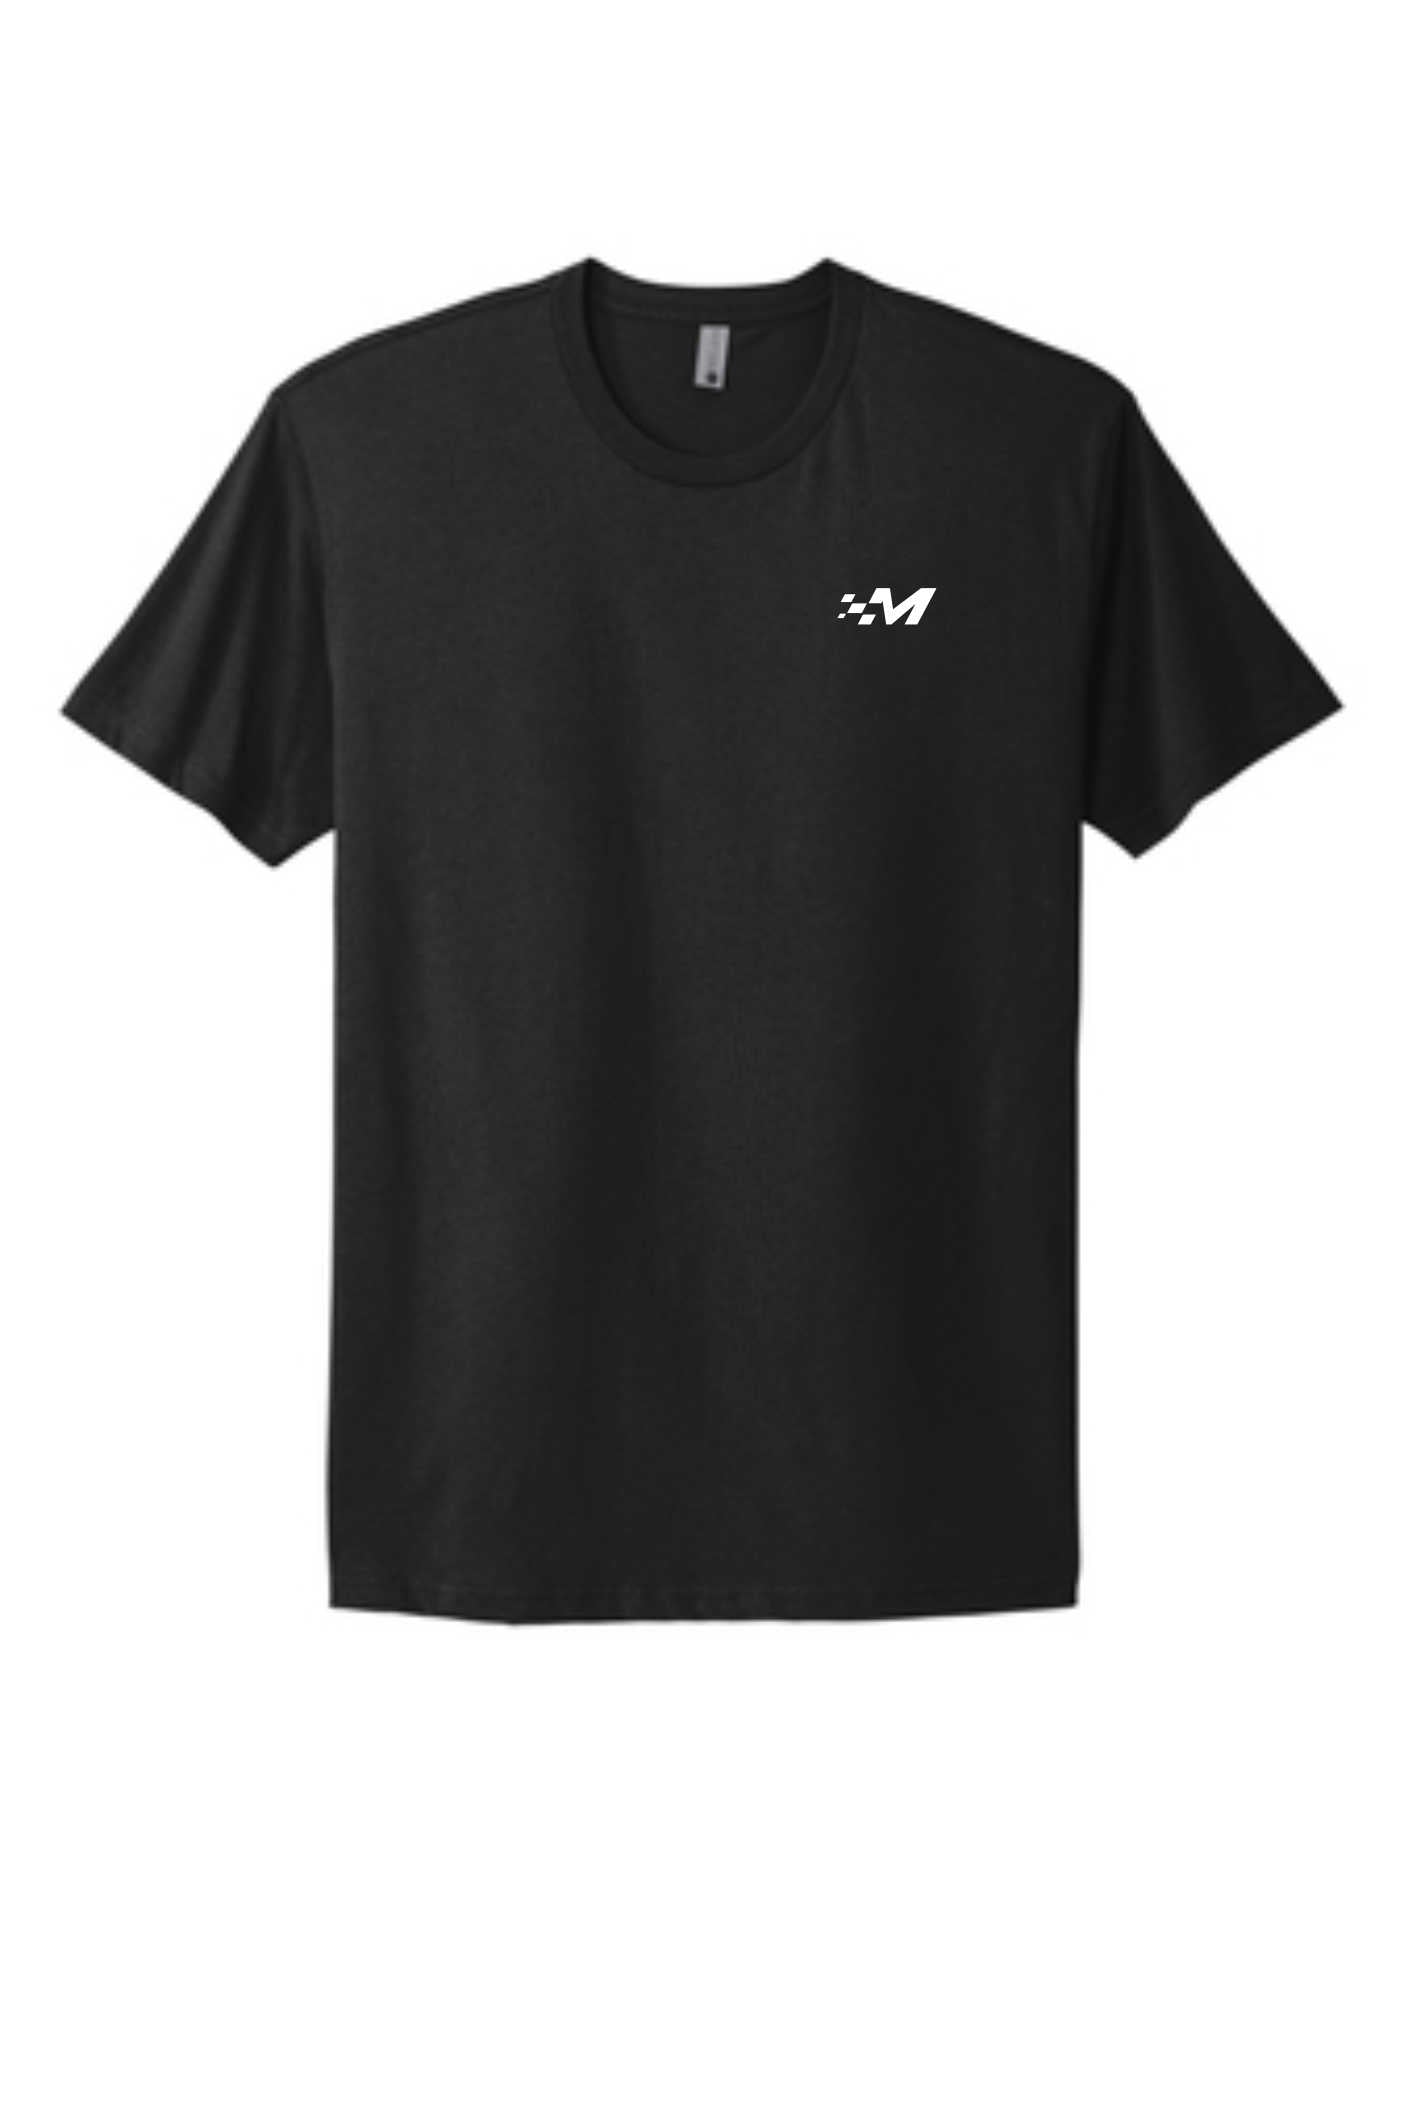 G80 M3 "Generations"  - Short Sleeve T-Shirt - Black